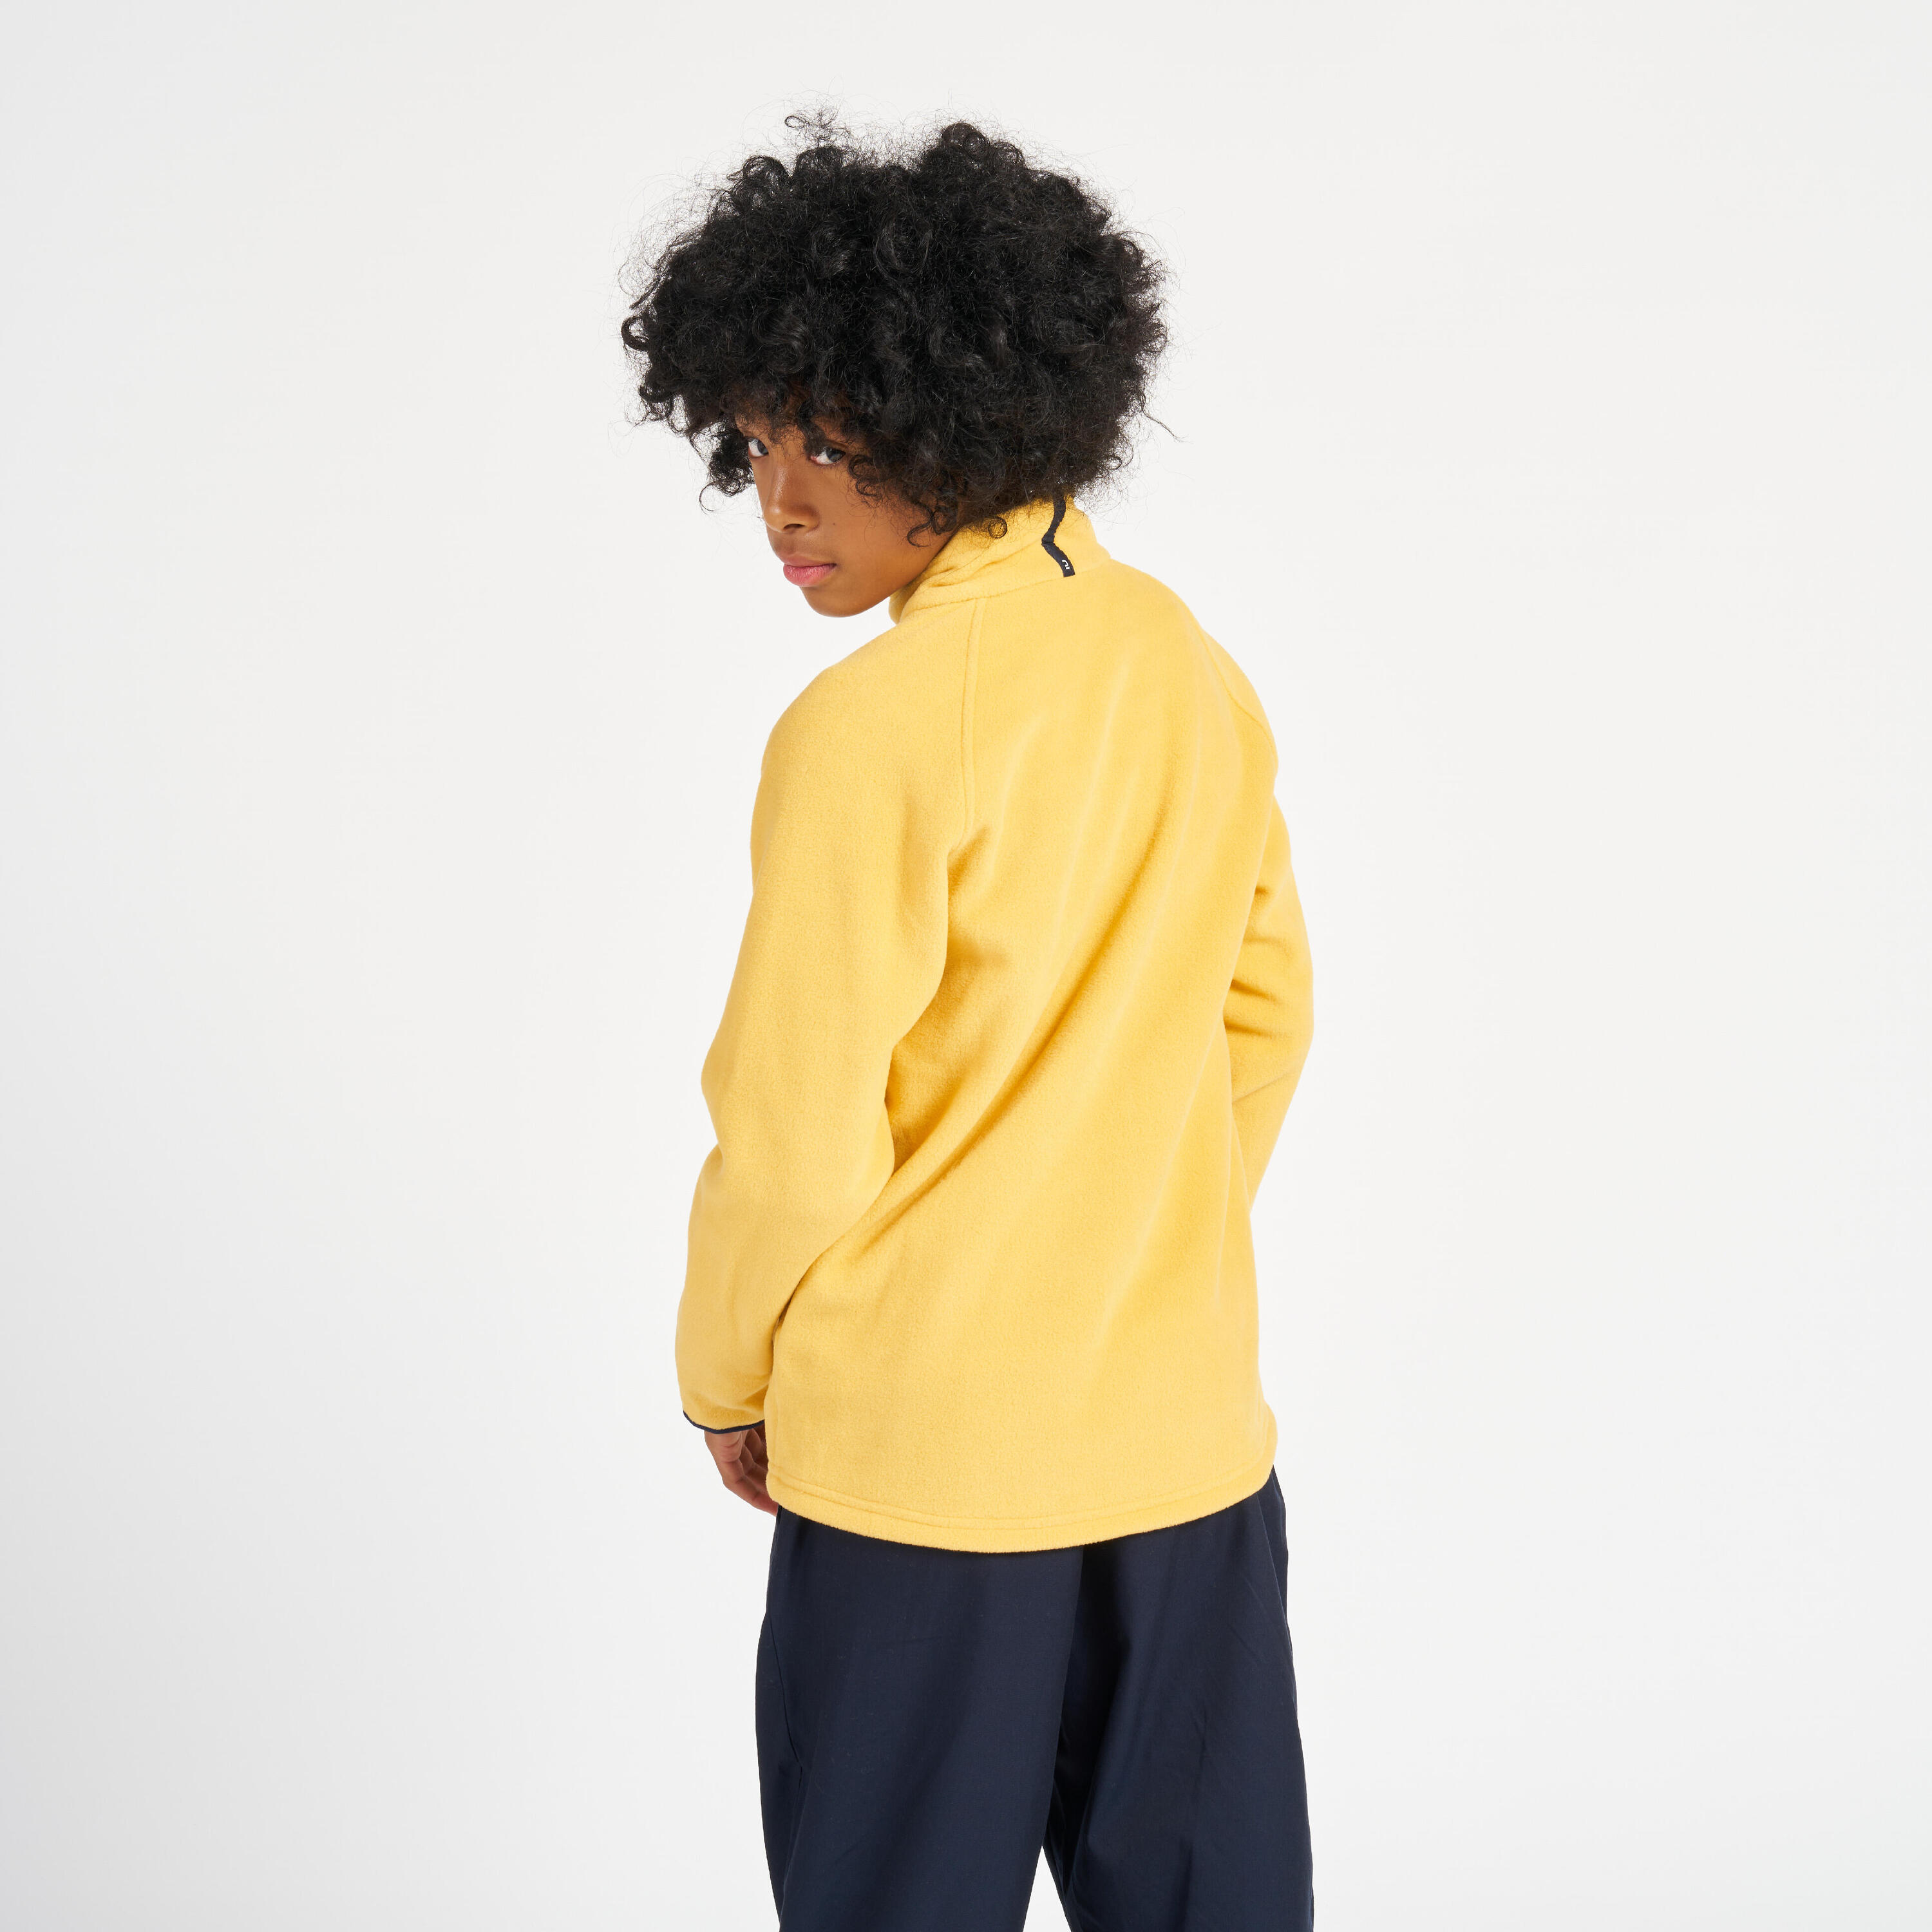 Kids warm fleece sailing jacket 100 - Yellow 3/14